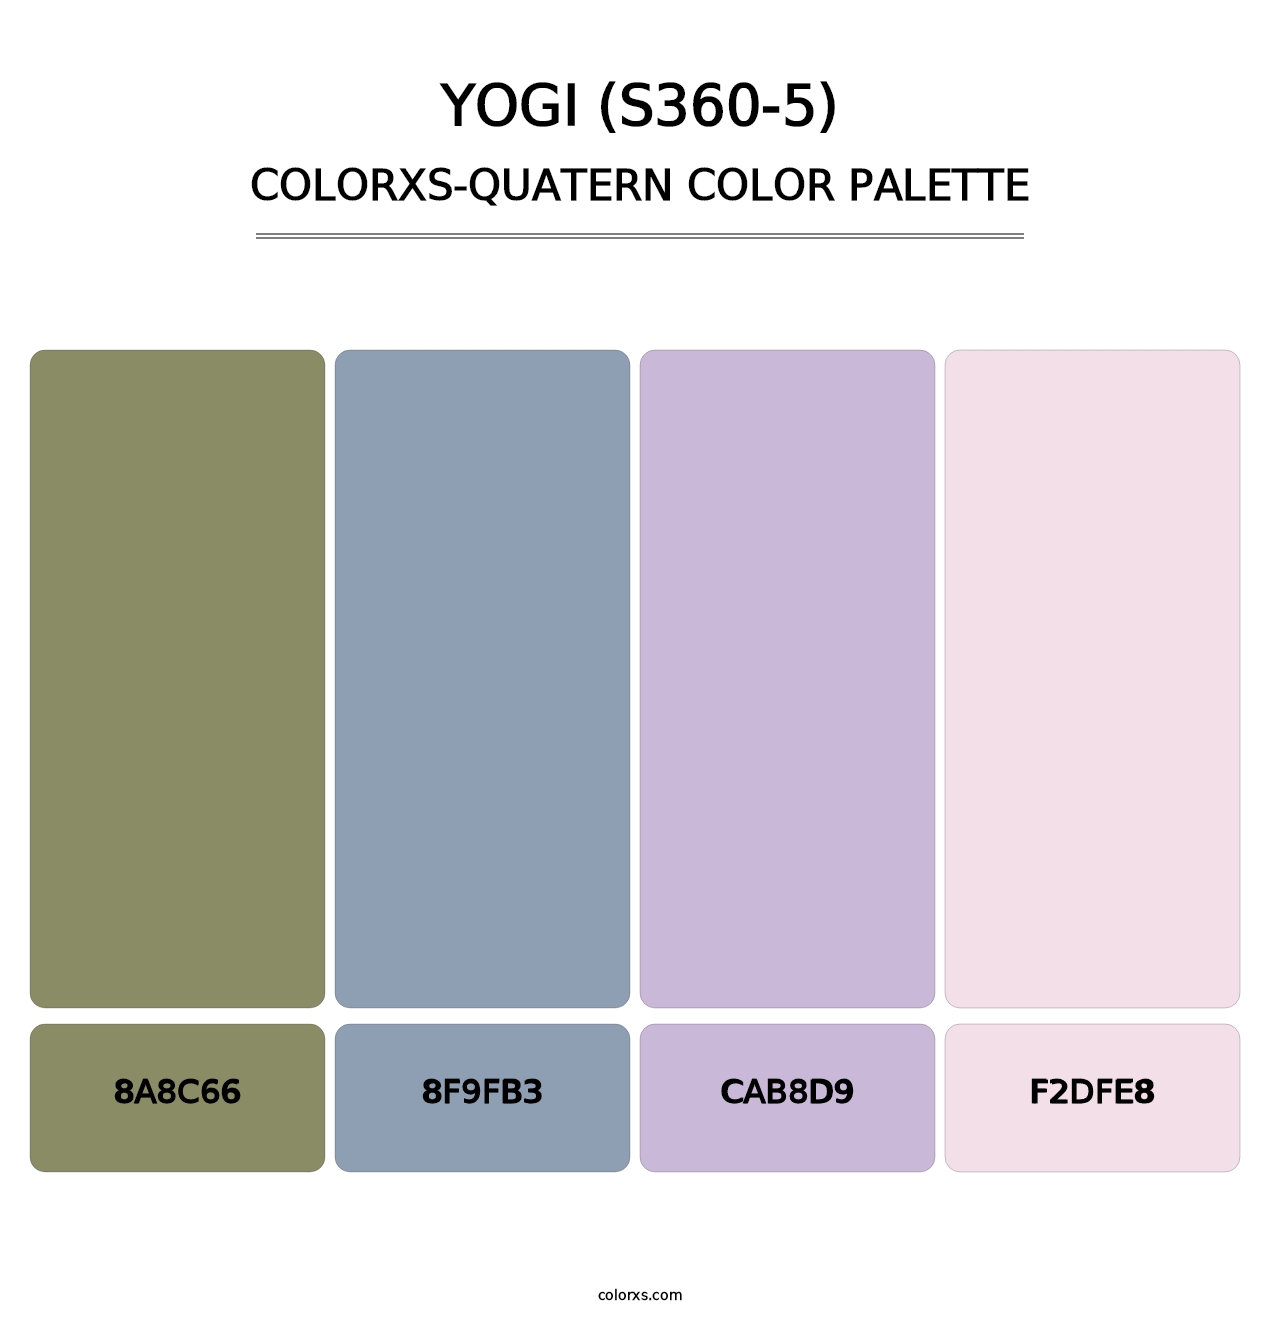 Yogi (S360-5) - Colorxs Quatern Palette